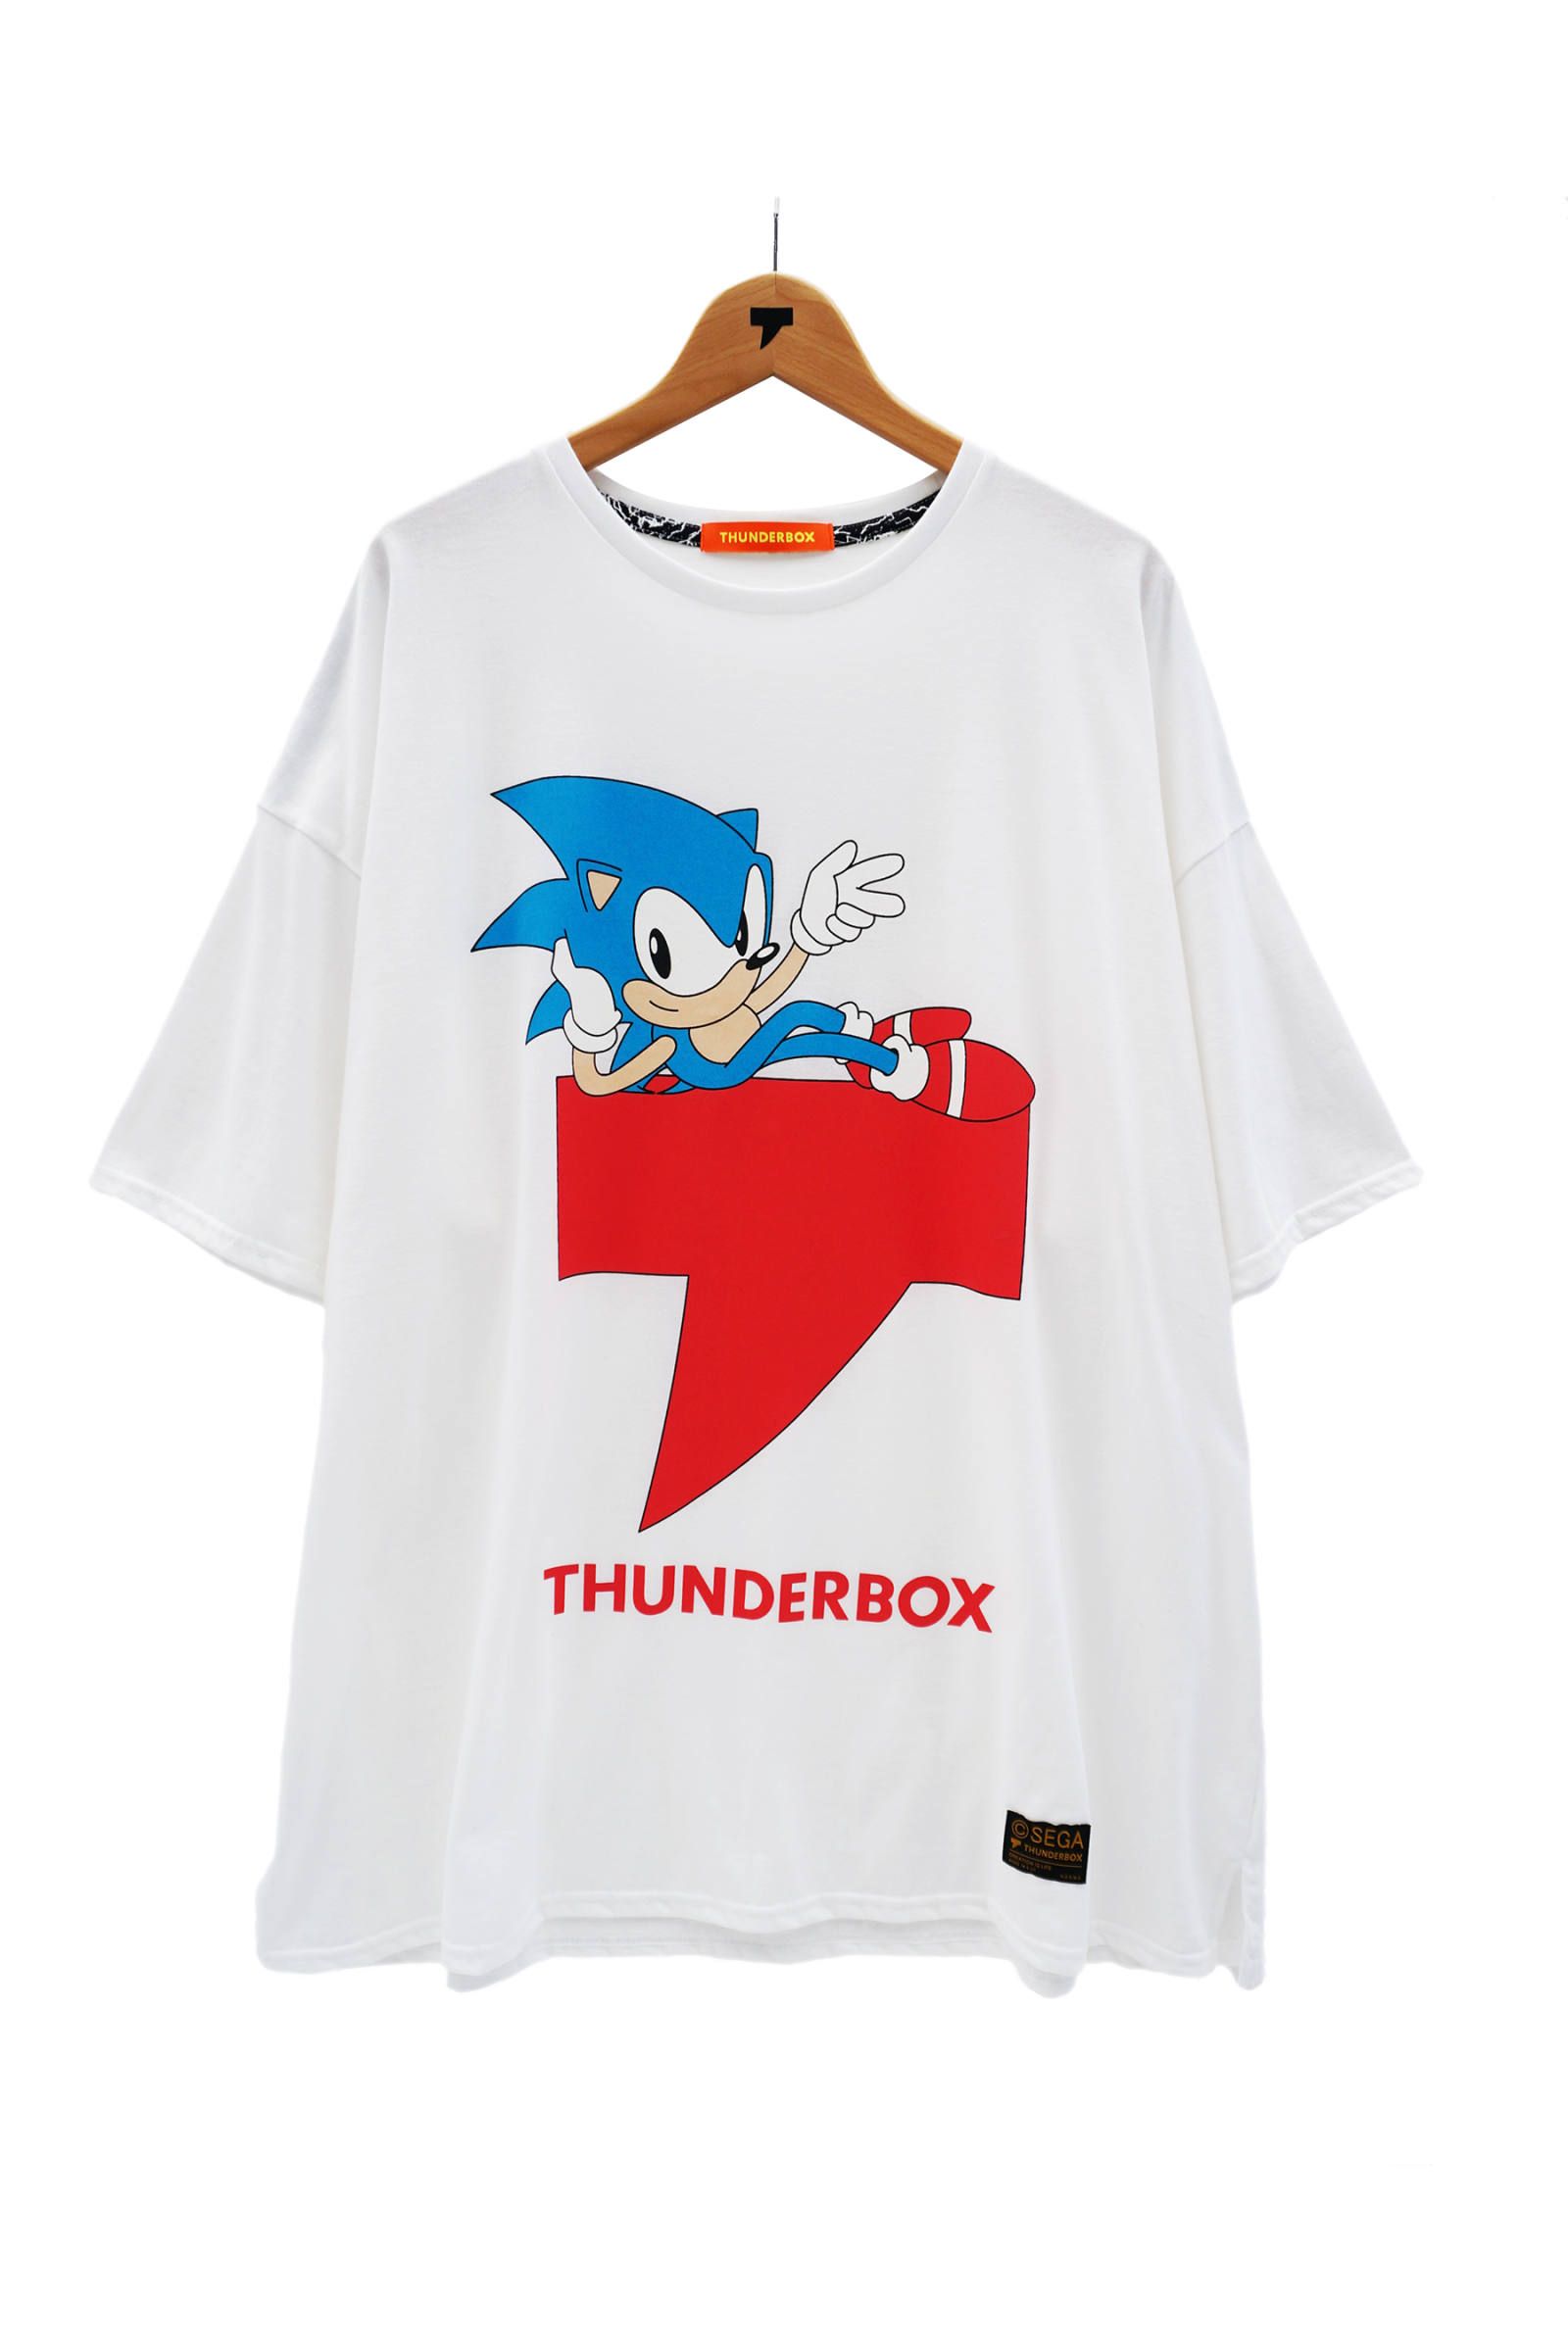 ThunderBox The Big Shirts - シャツ